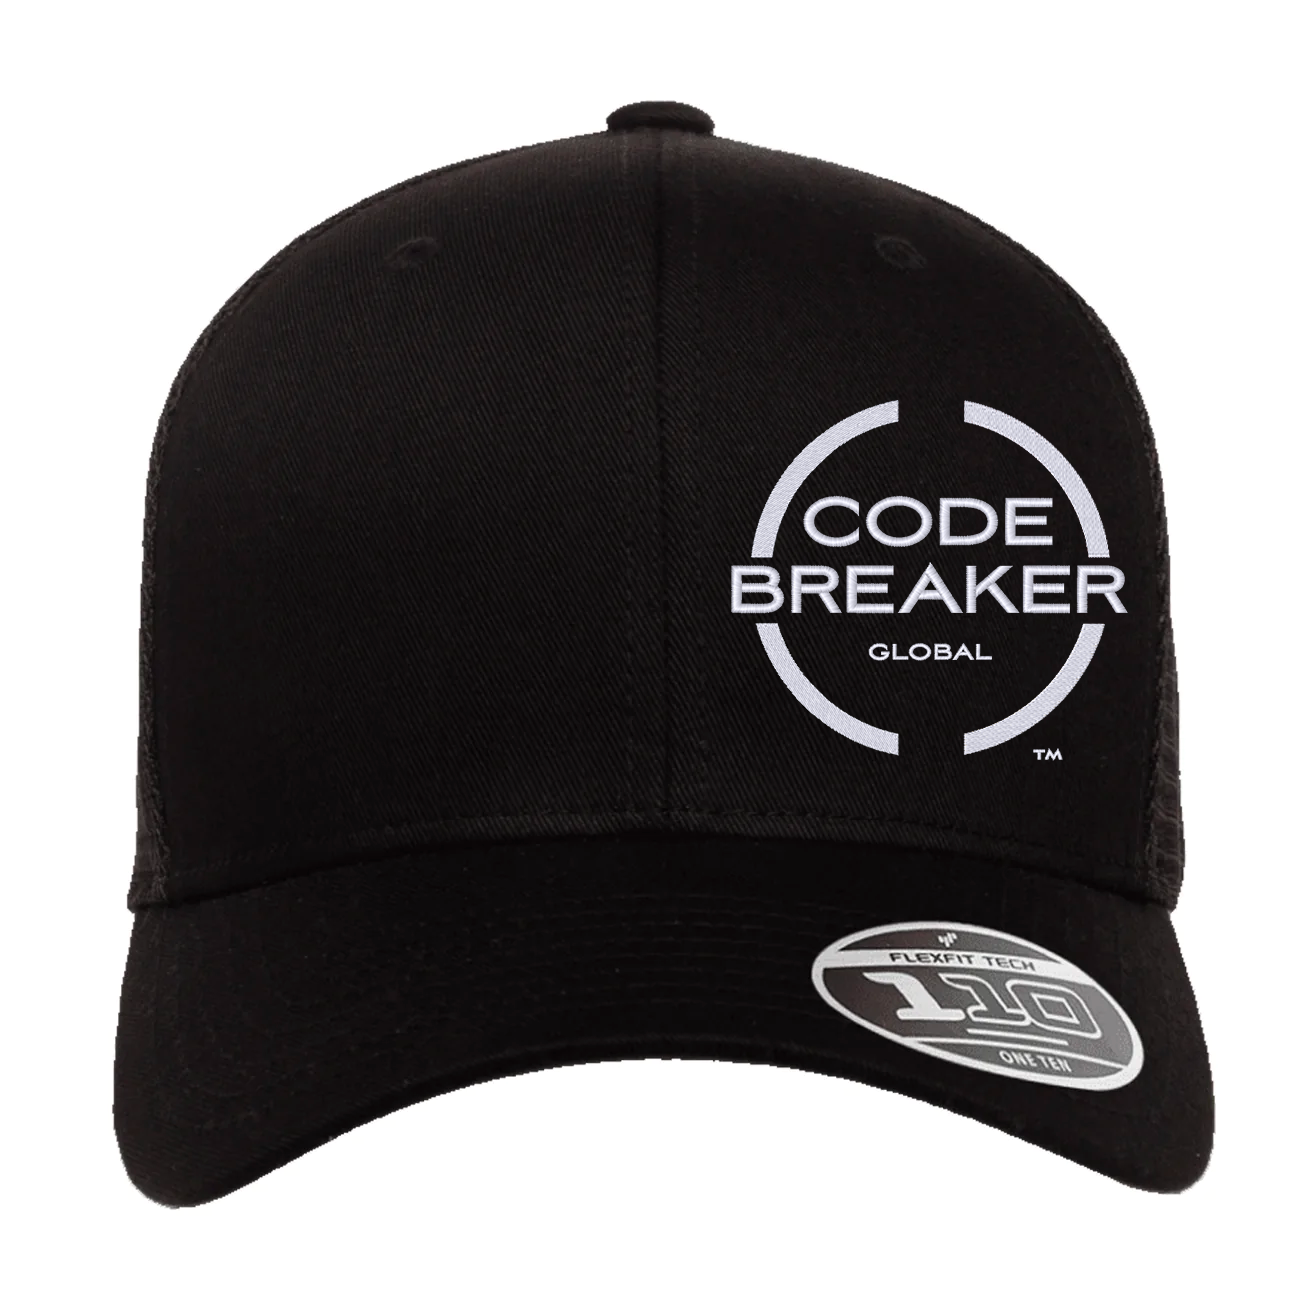 Codebreaker Global - FlexFit Solid Mesh Cap w/ Adjustable Snap